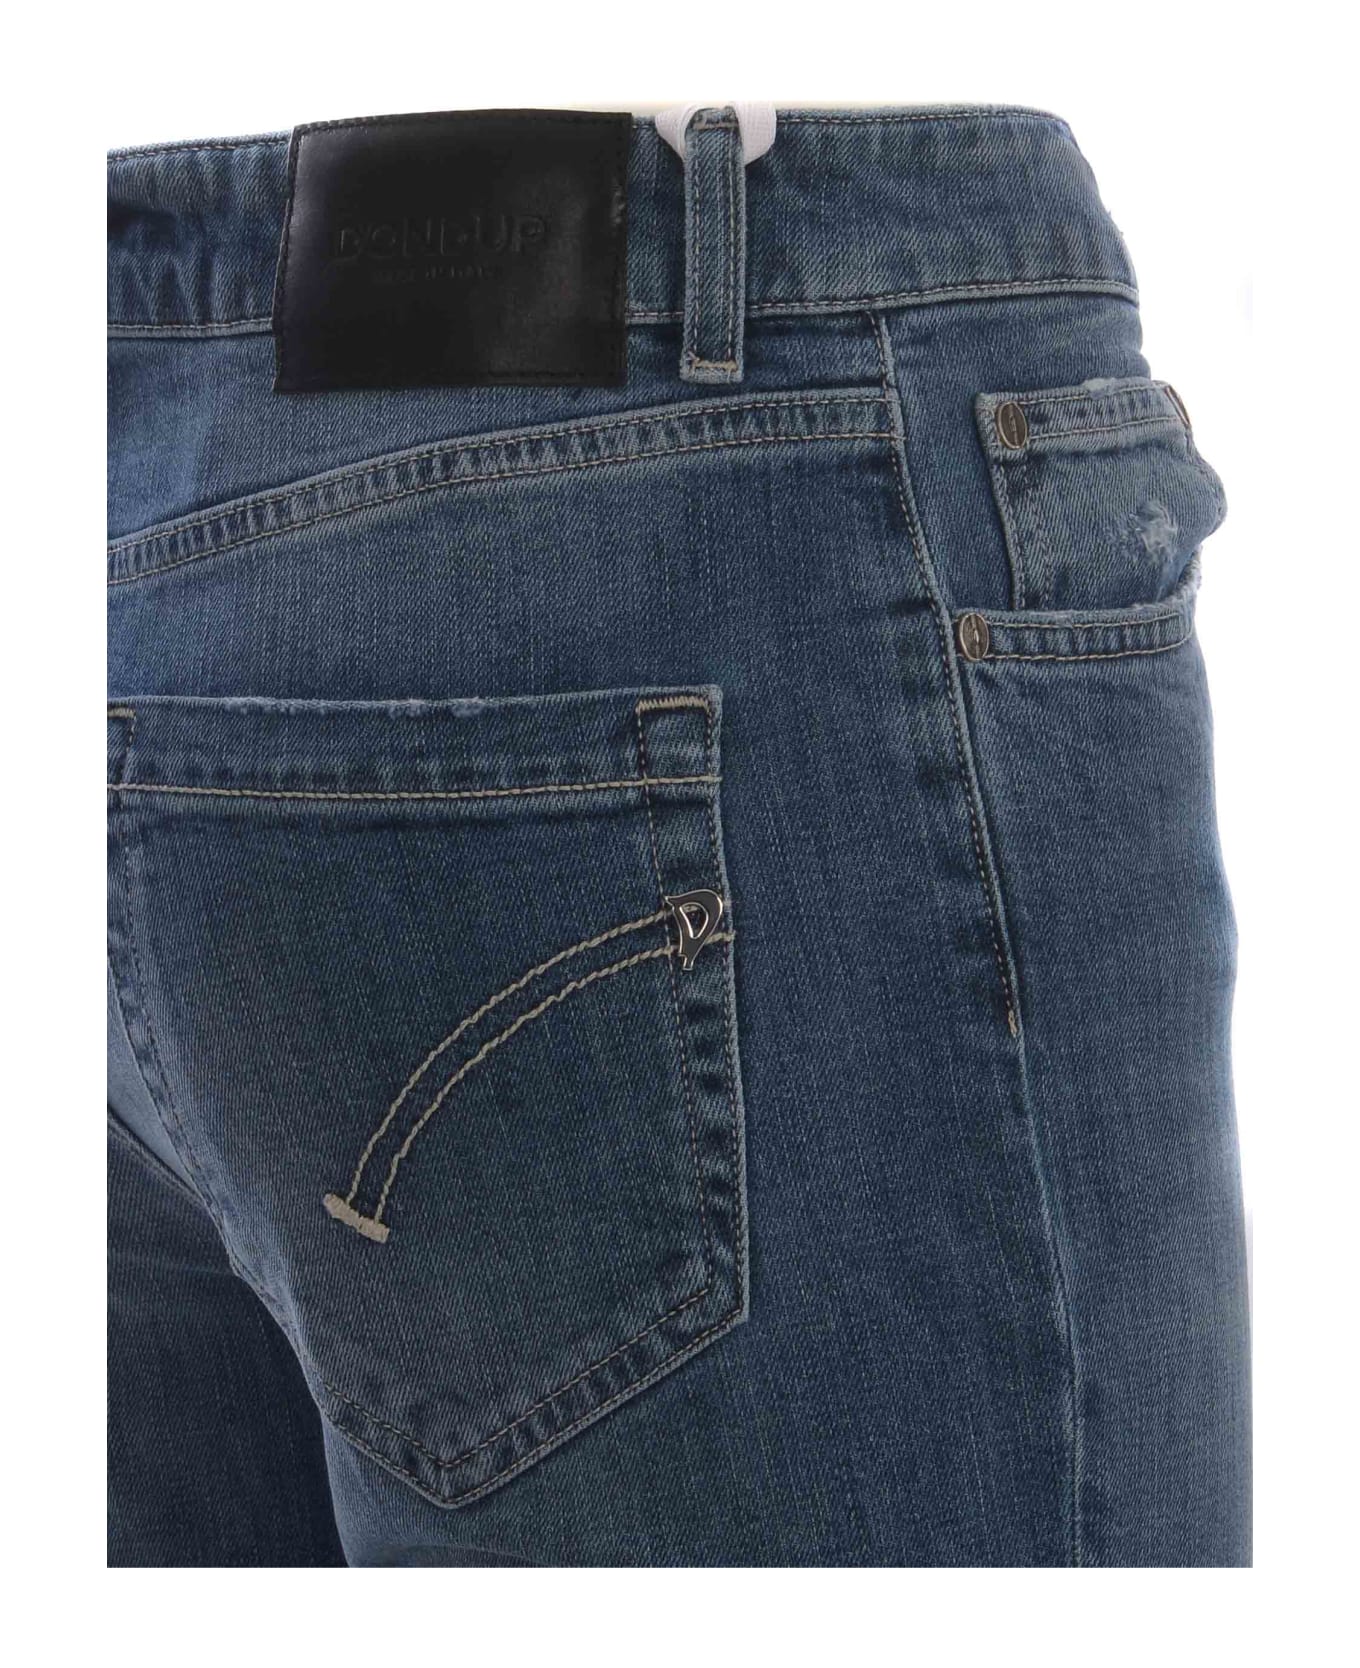 Dondup Jeans Dondup "koons" Made Of Denim Stretch - Denim azzurro デニム